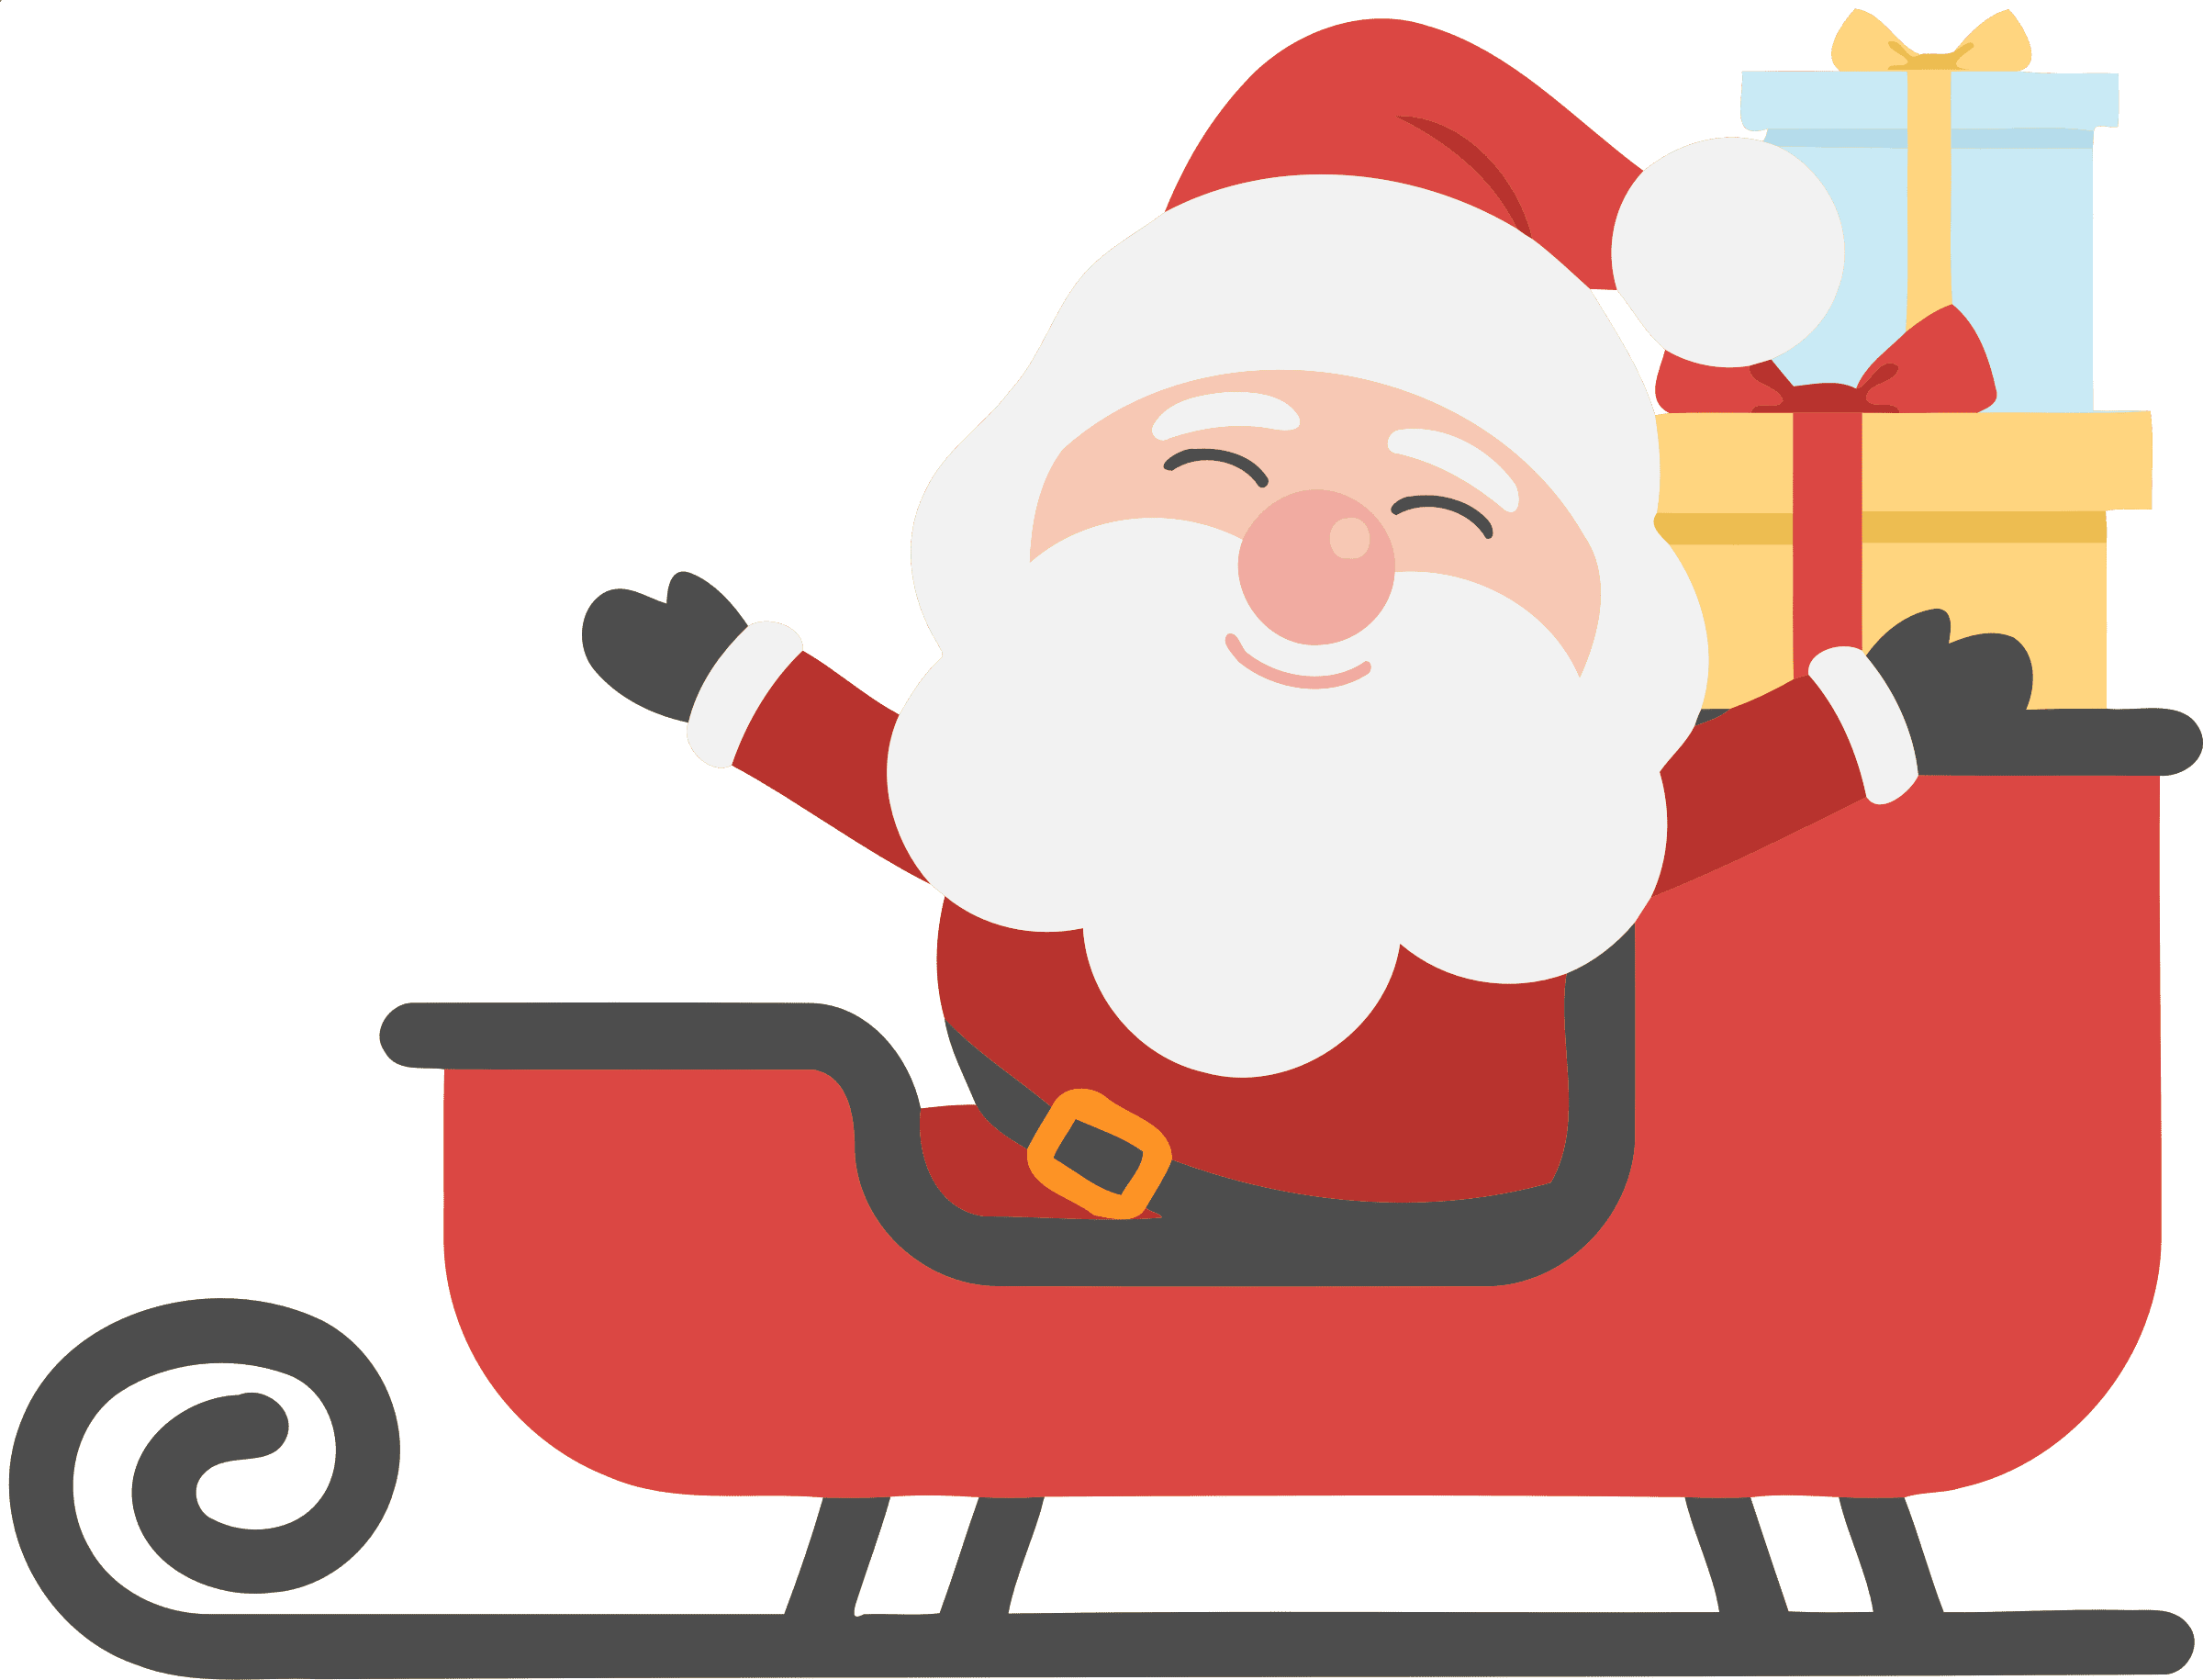 A Cartoon Of A Santa Claus In A Sleigh With A Gift